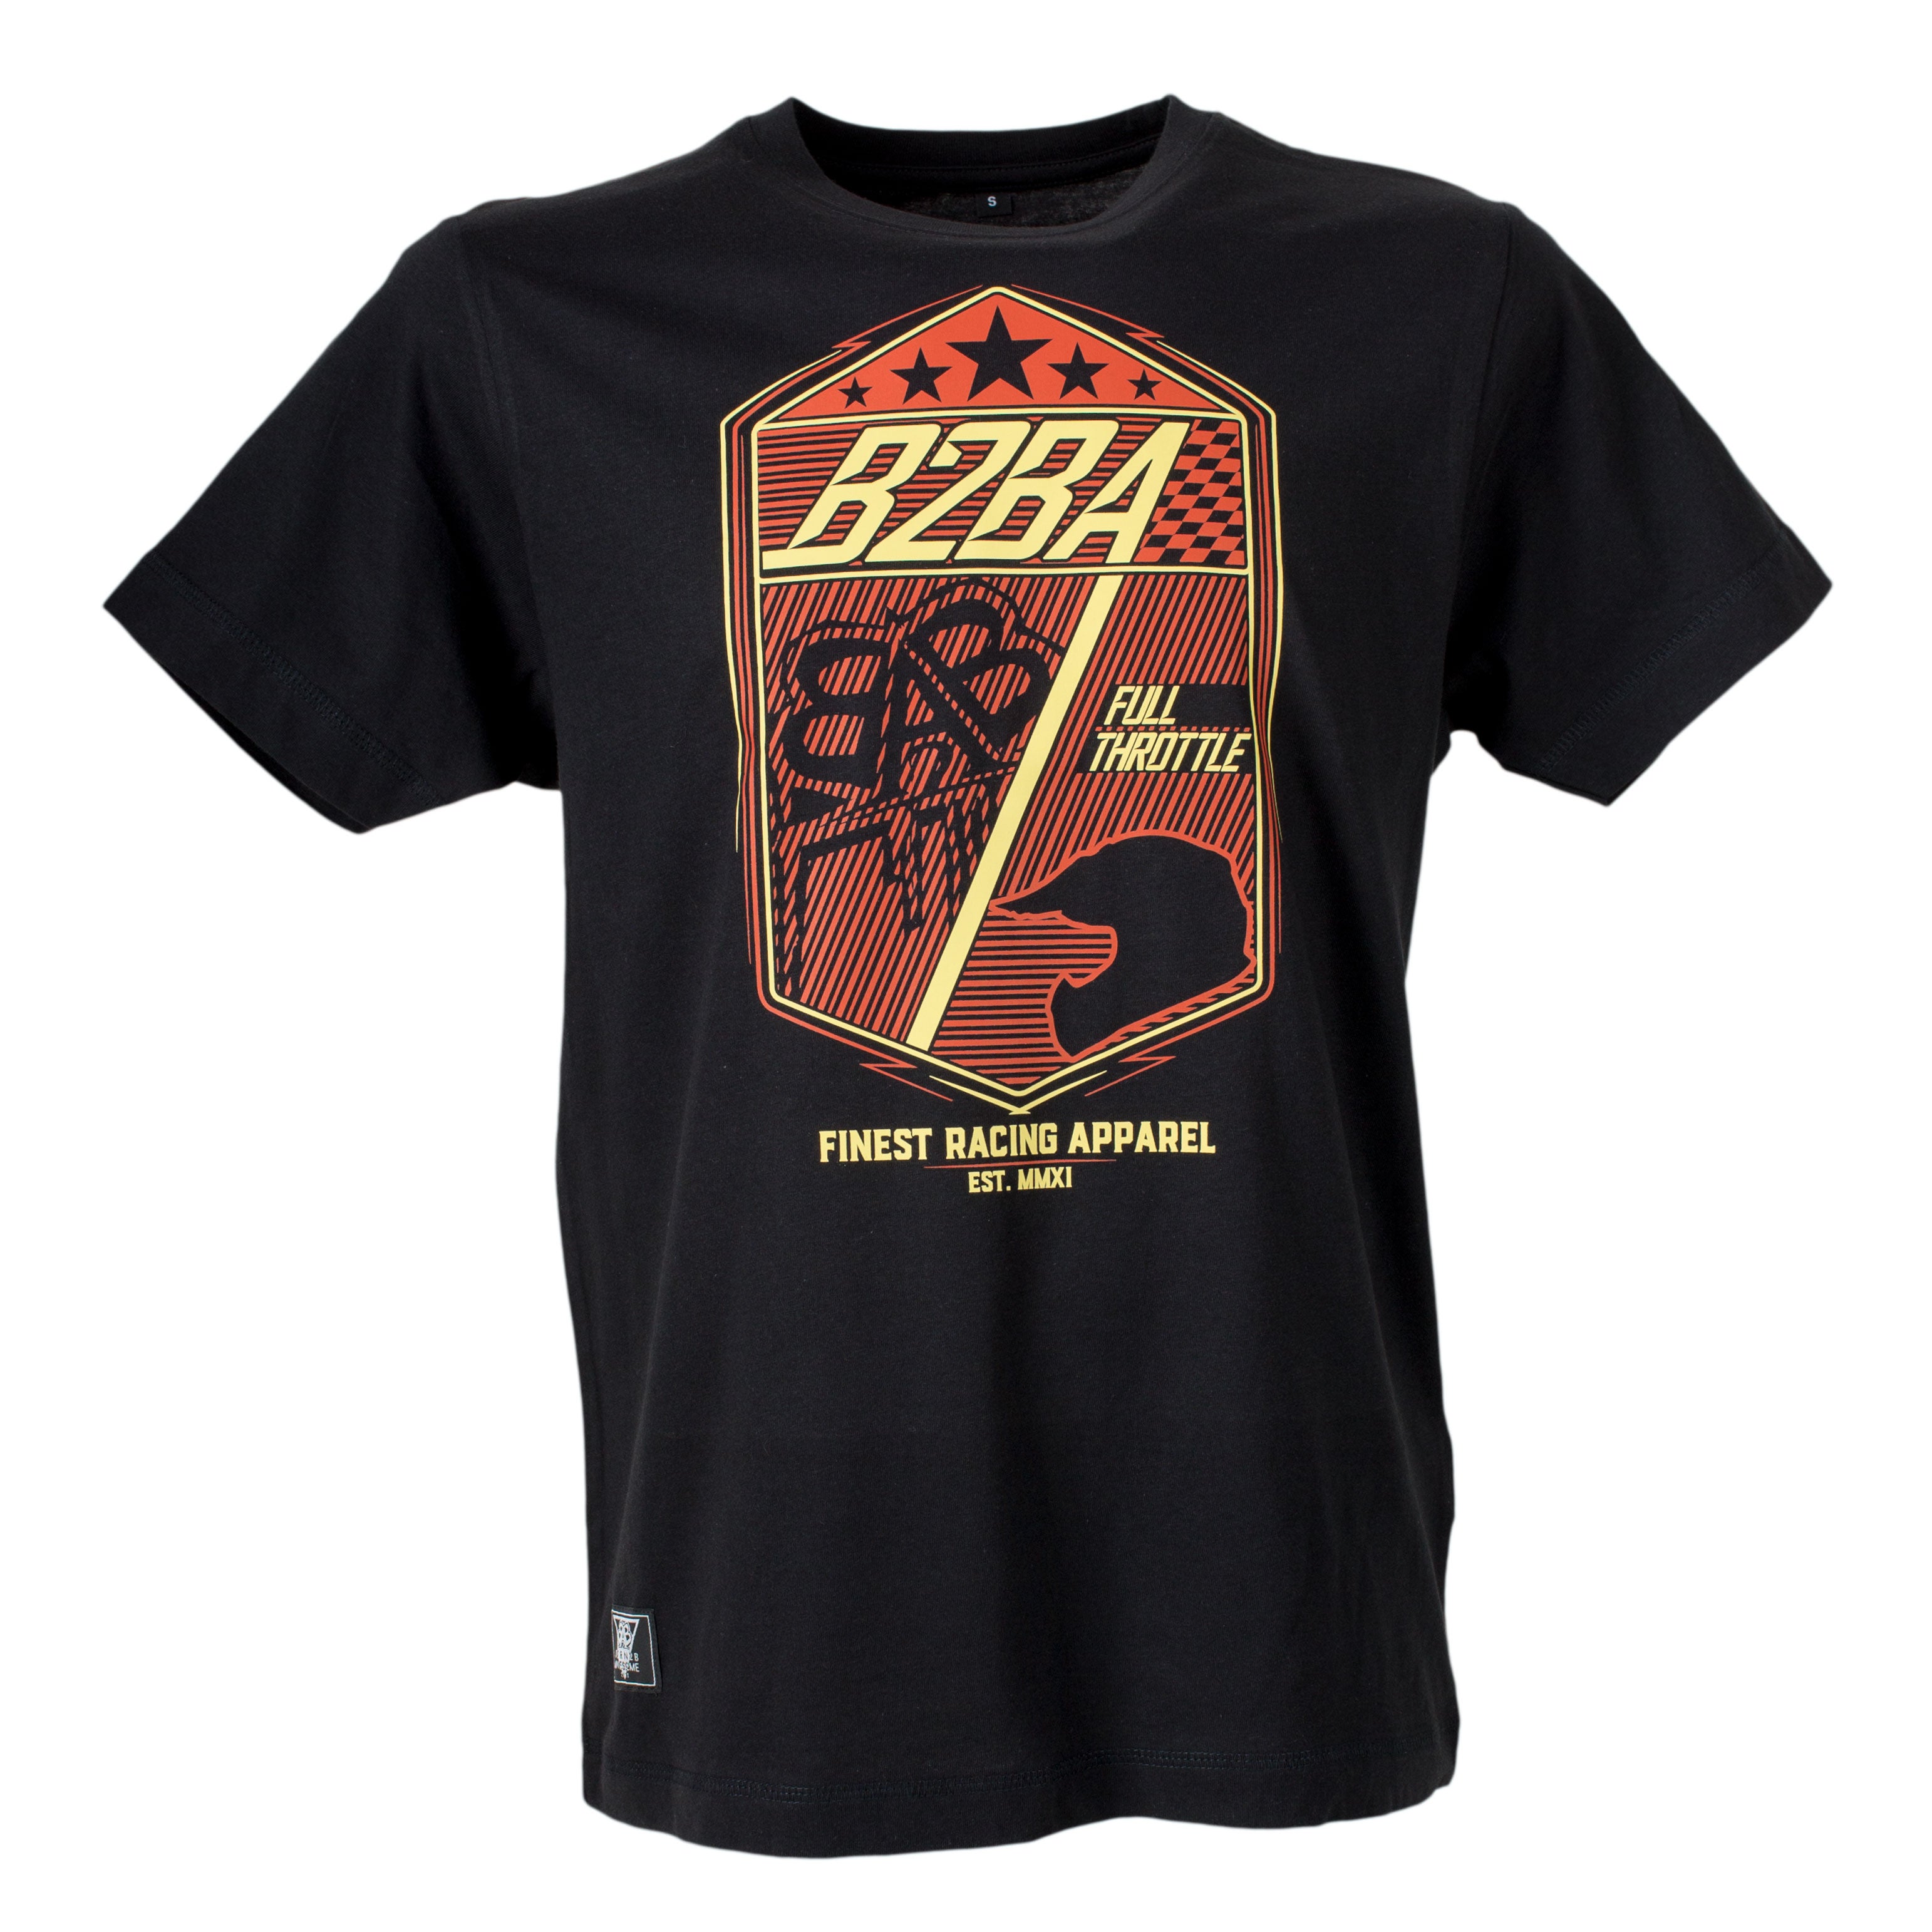 Full Throttle T-Shirt - B2BA Clothing